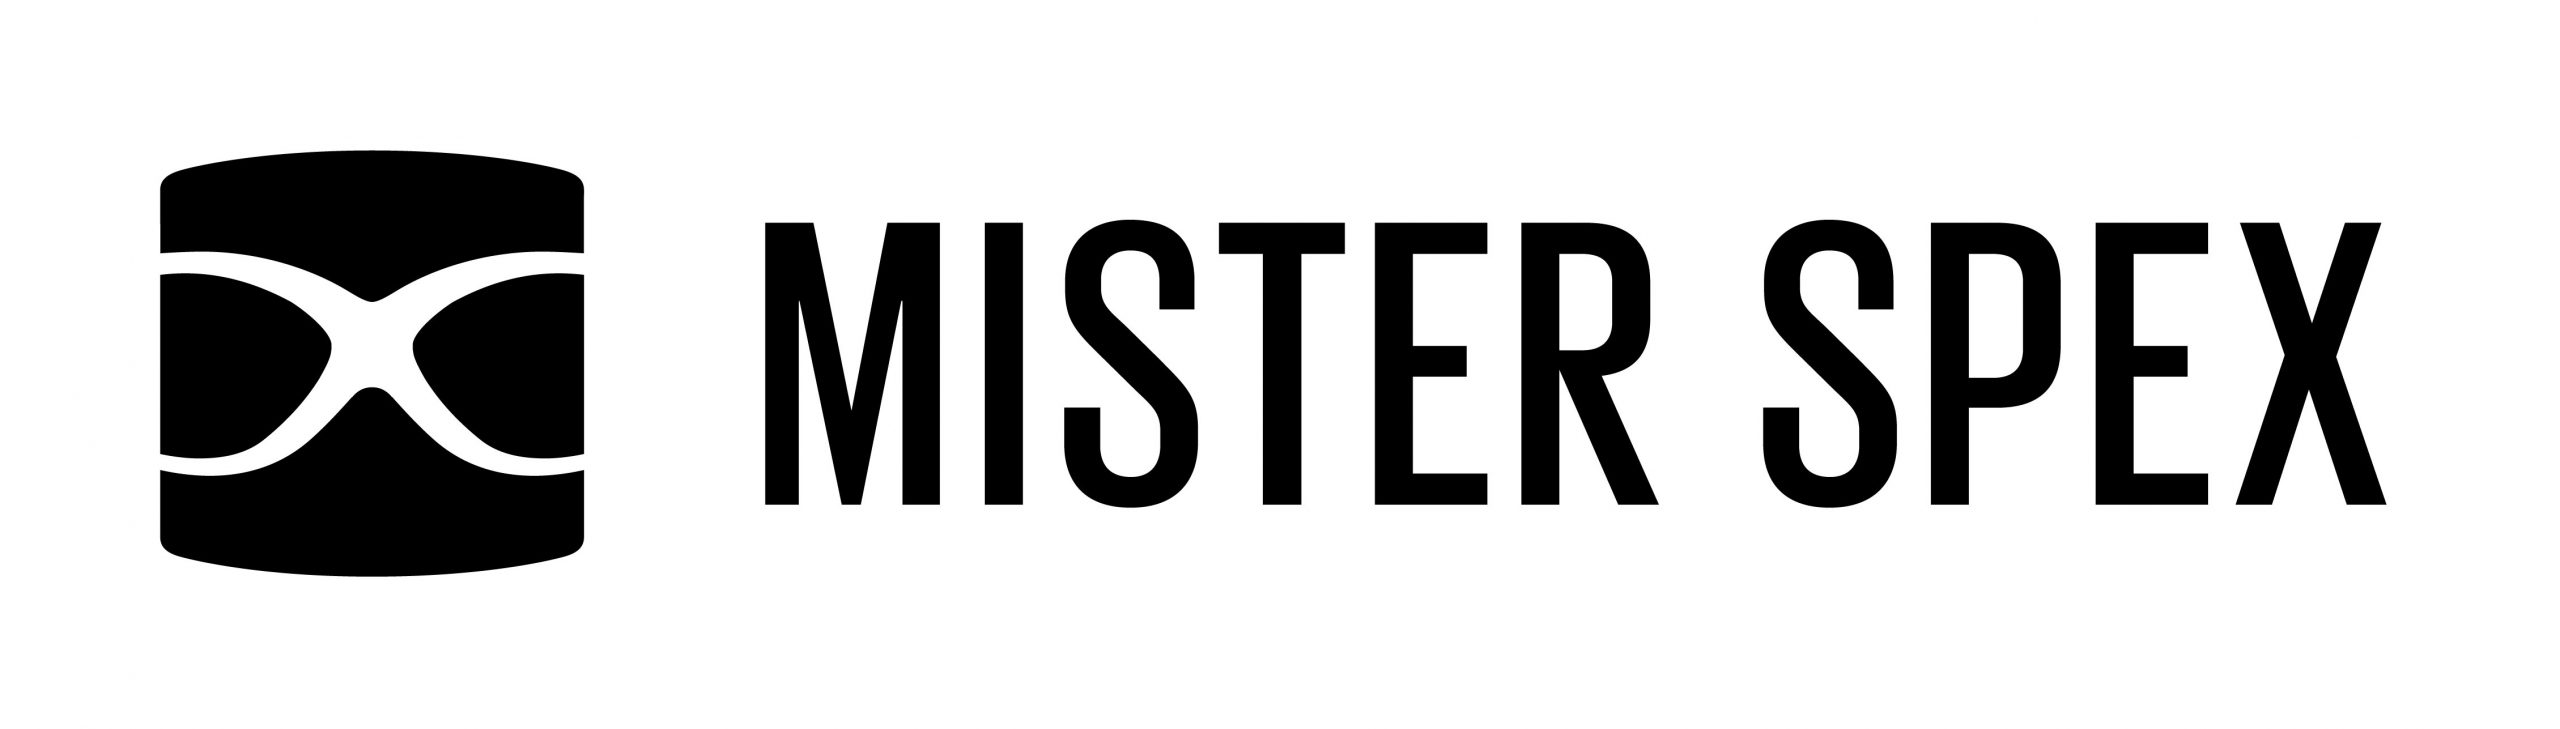 misterspex-logo